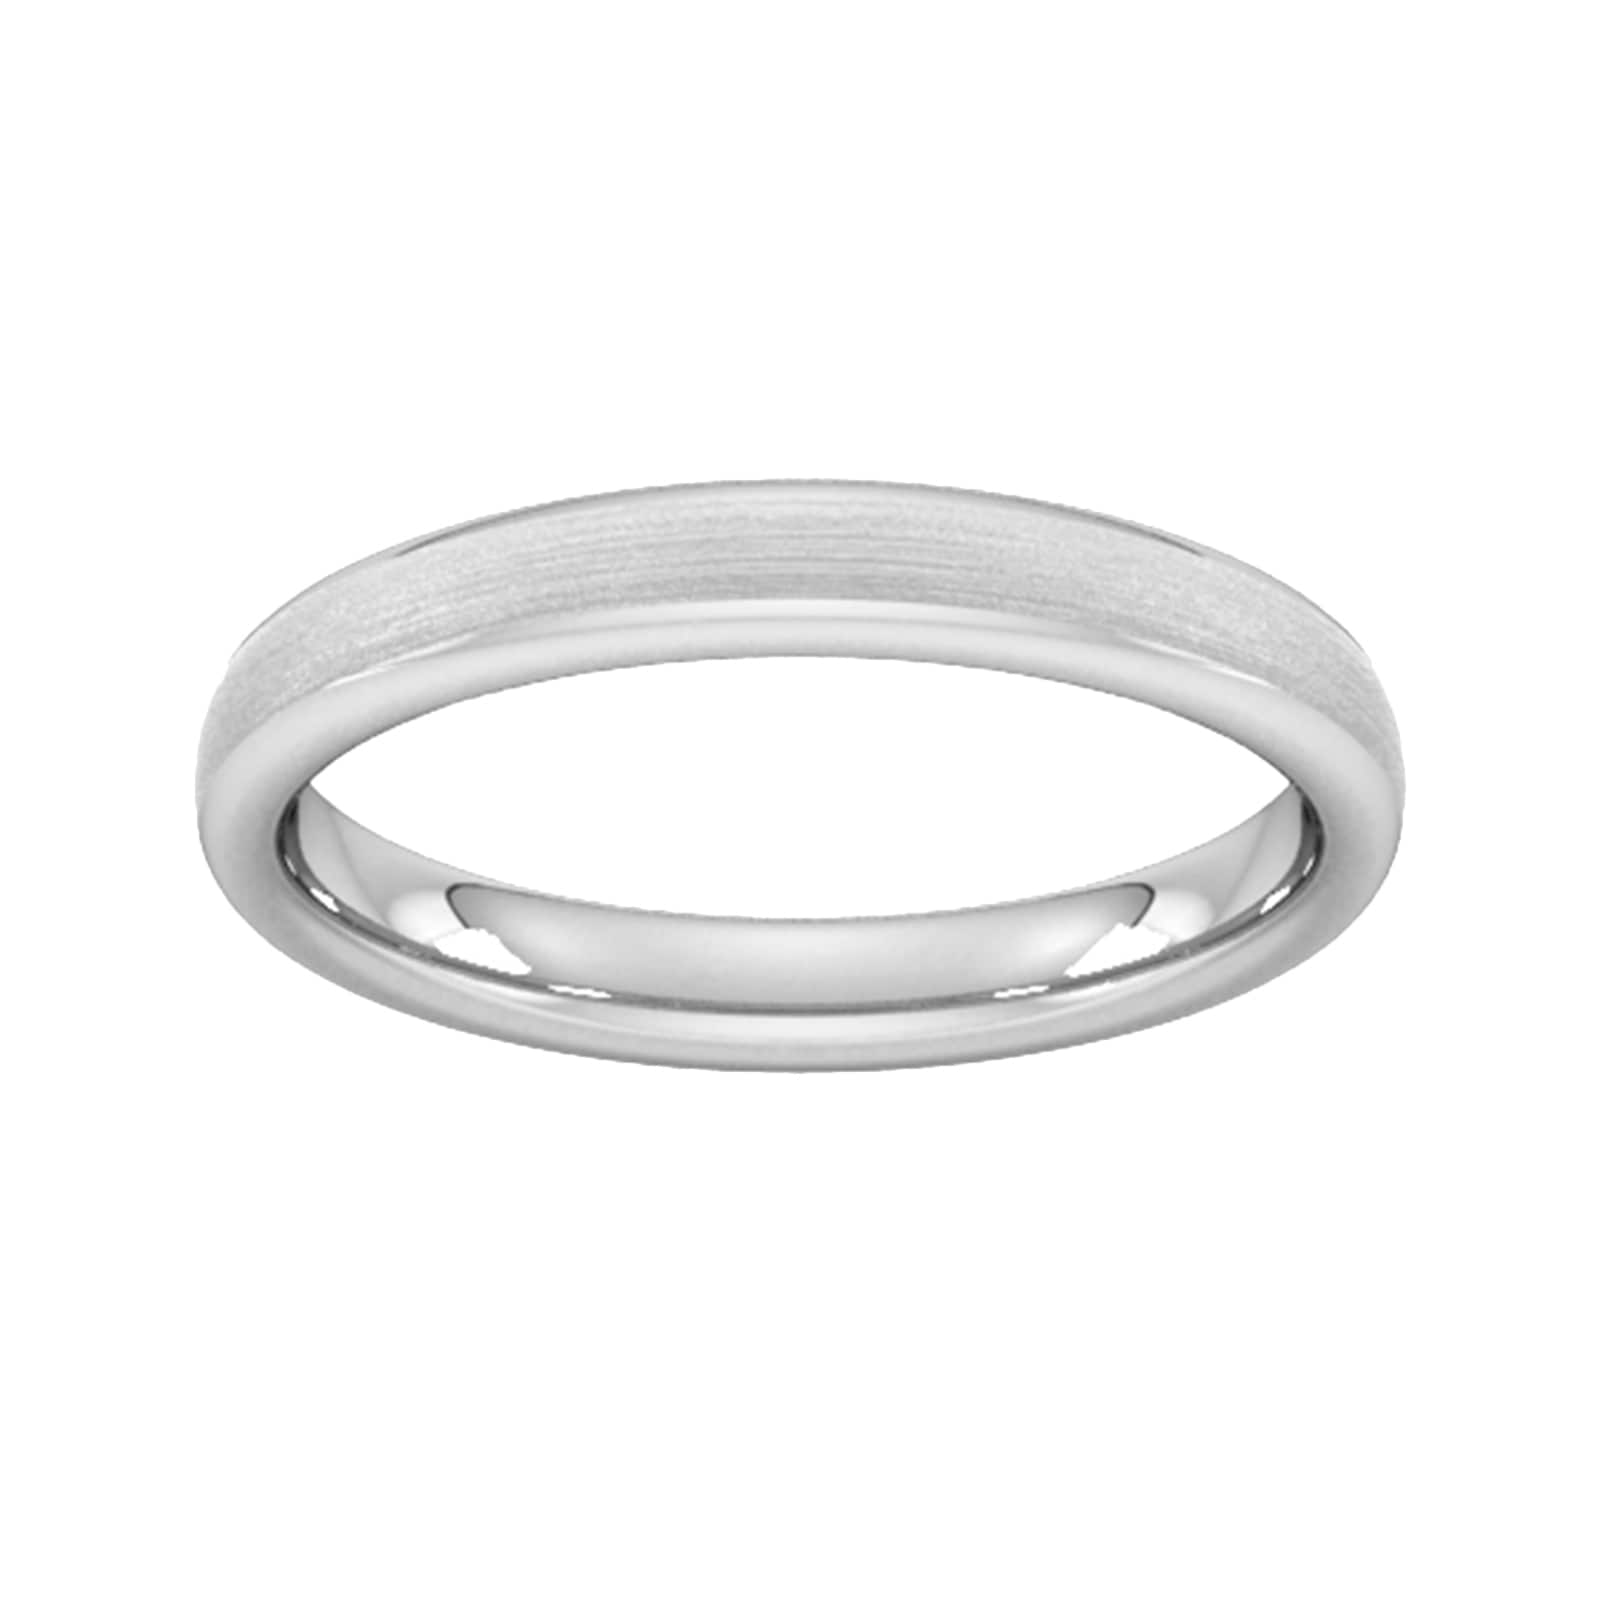 3mm Slight Court Standard Matt Finished Wedding Ring In 9 Carat White Gold - Ring Size Q